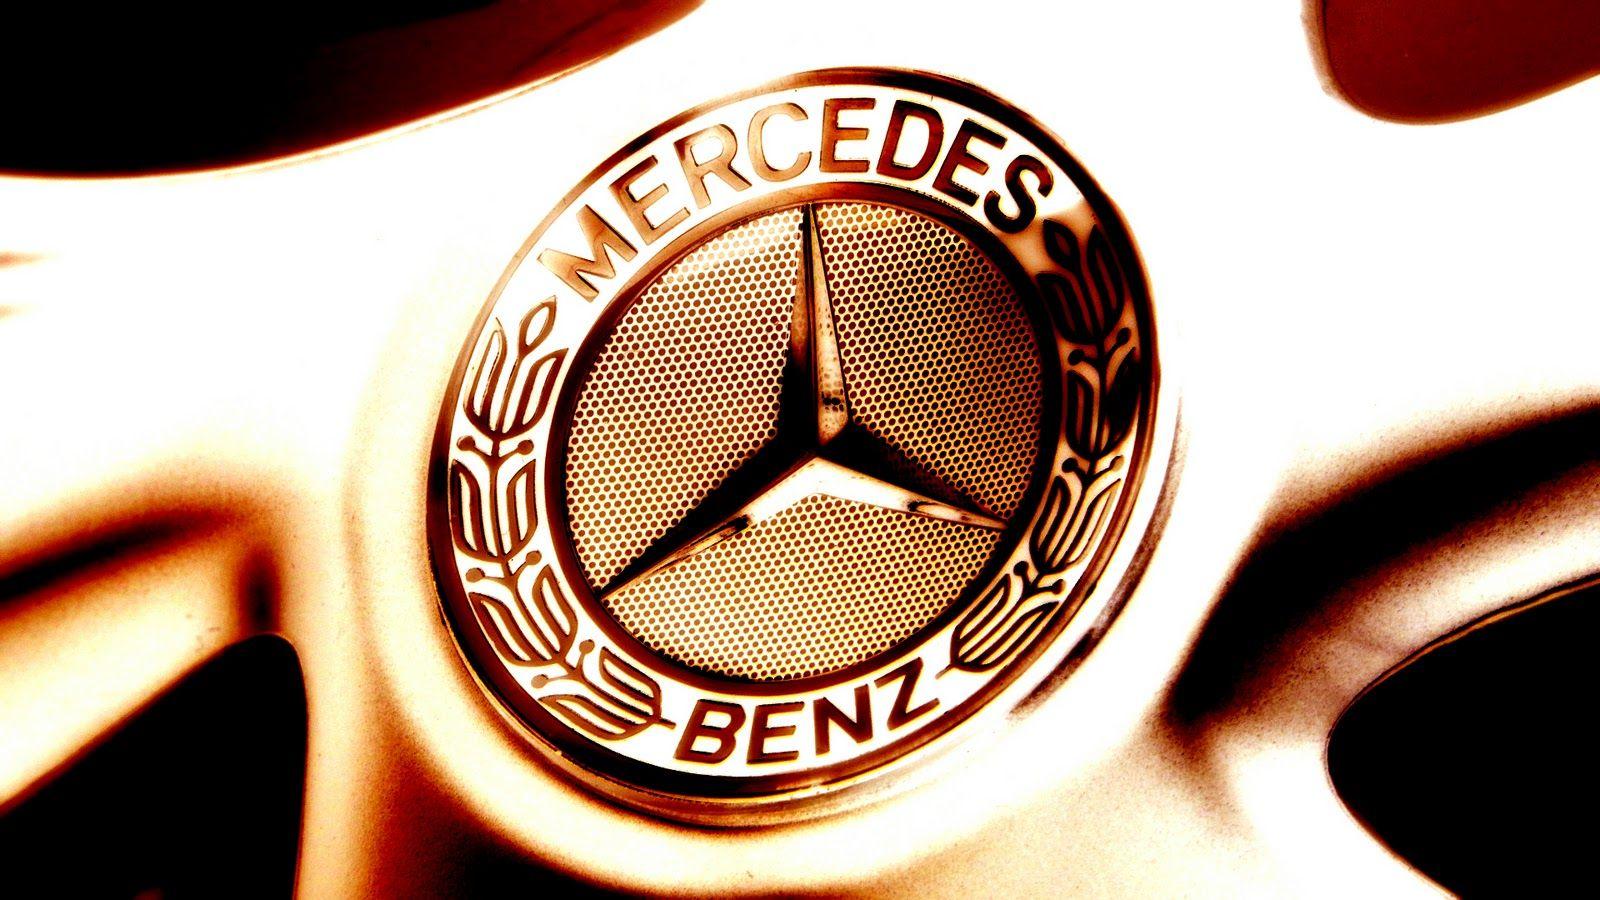 Orange Circle Car Logo - Mercedes Logo, Mercedes Benz Car Symbol Meaning And History. Car